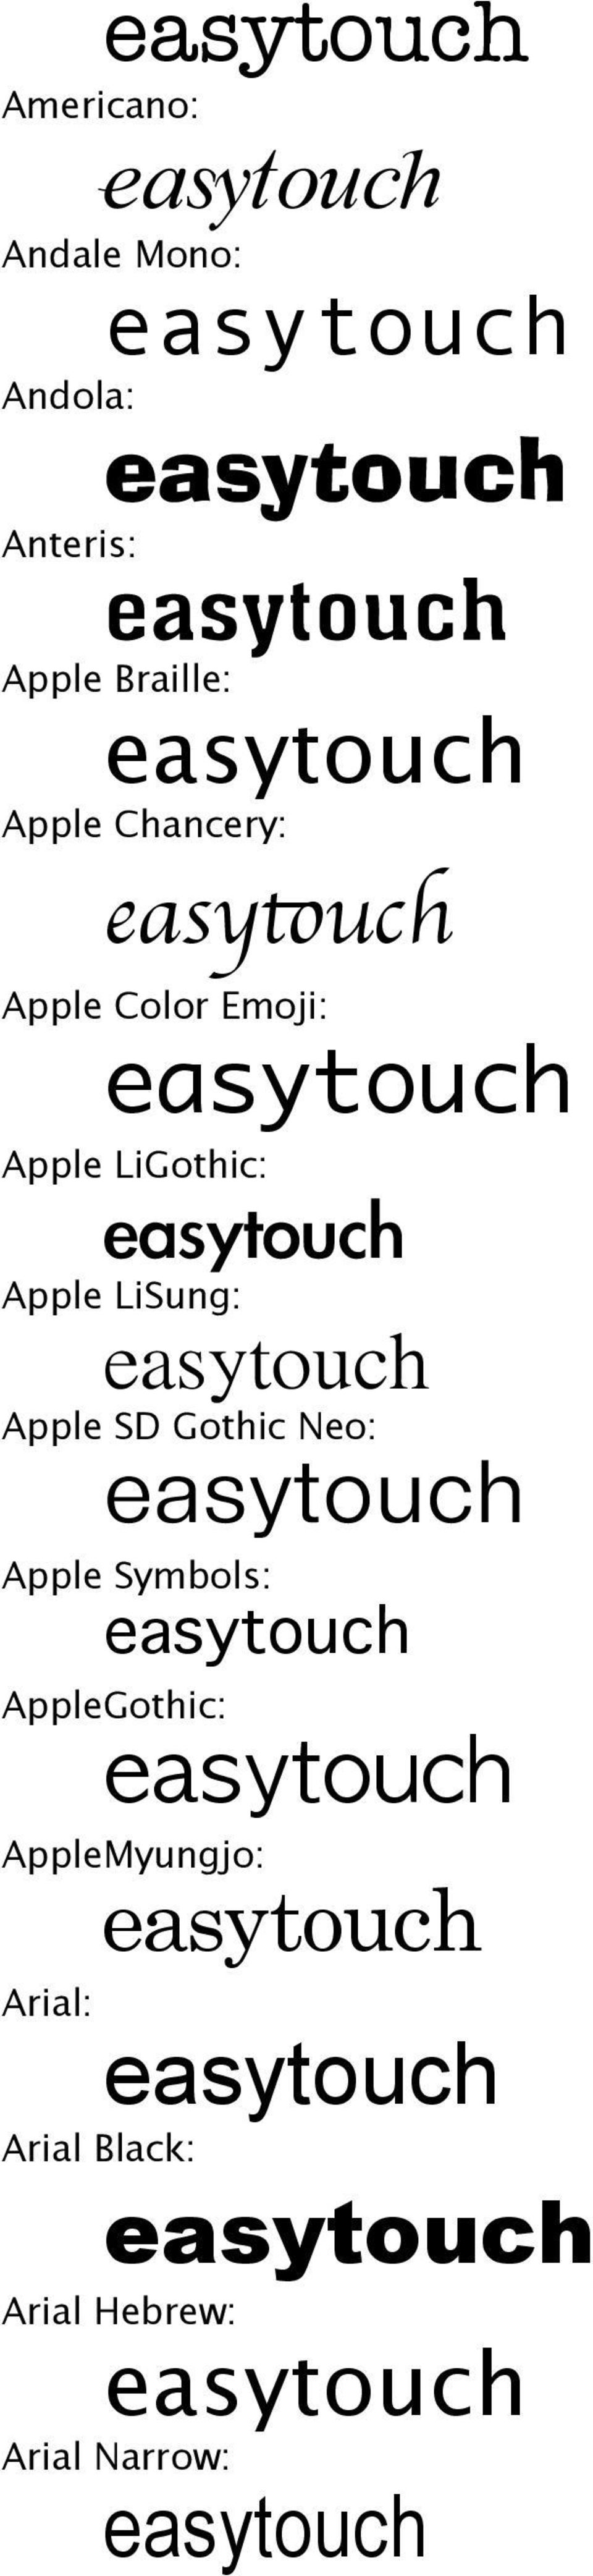 LiSung: Apple SD Gothic Neo: Apple Symbols: AppleGothic: